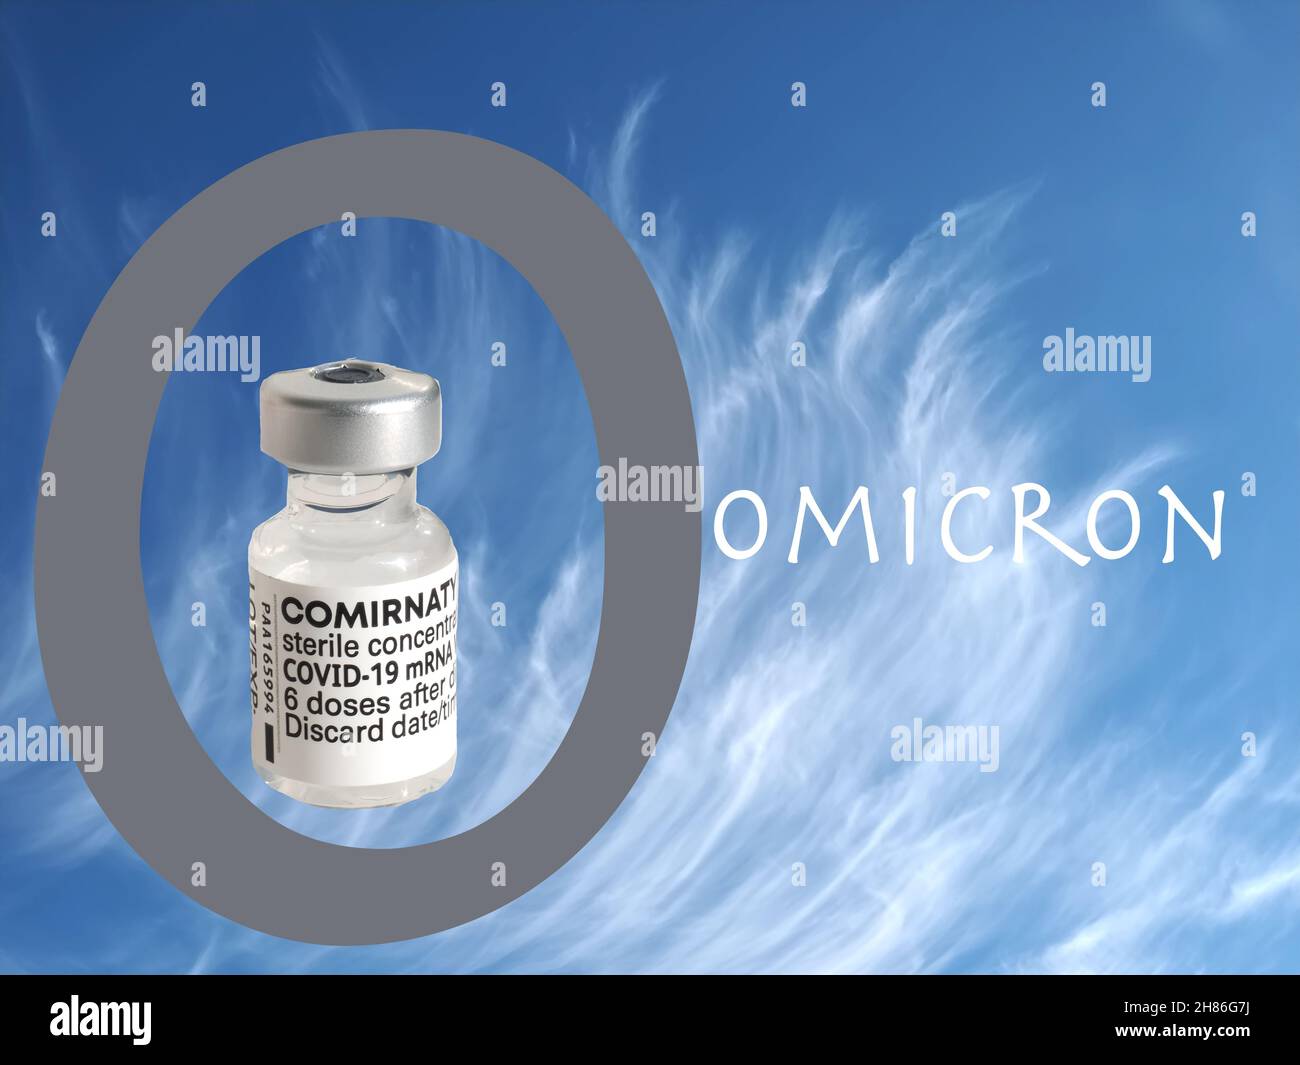 Omicron symbol with Biontech Pfizer Vaccine Stock Photo